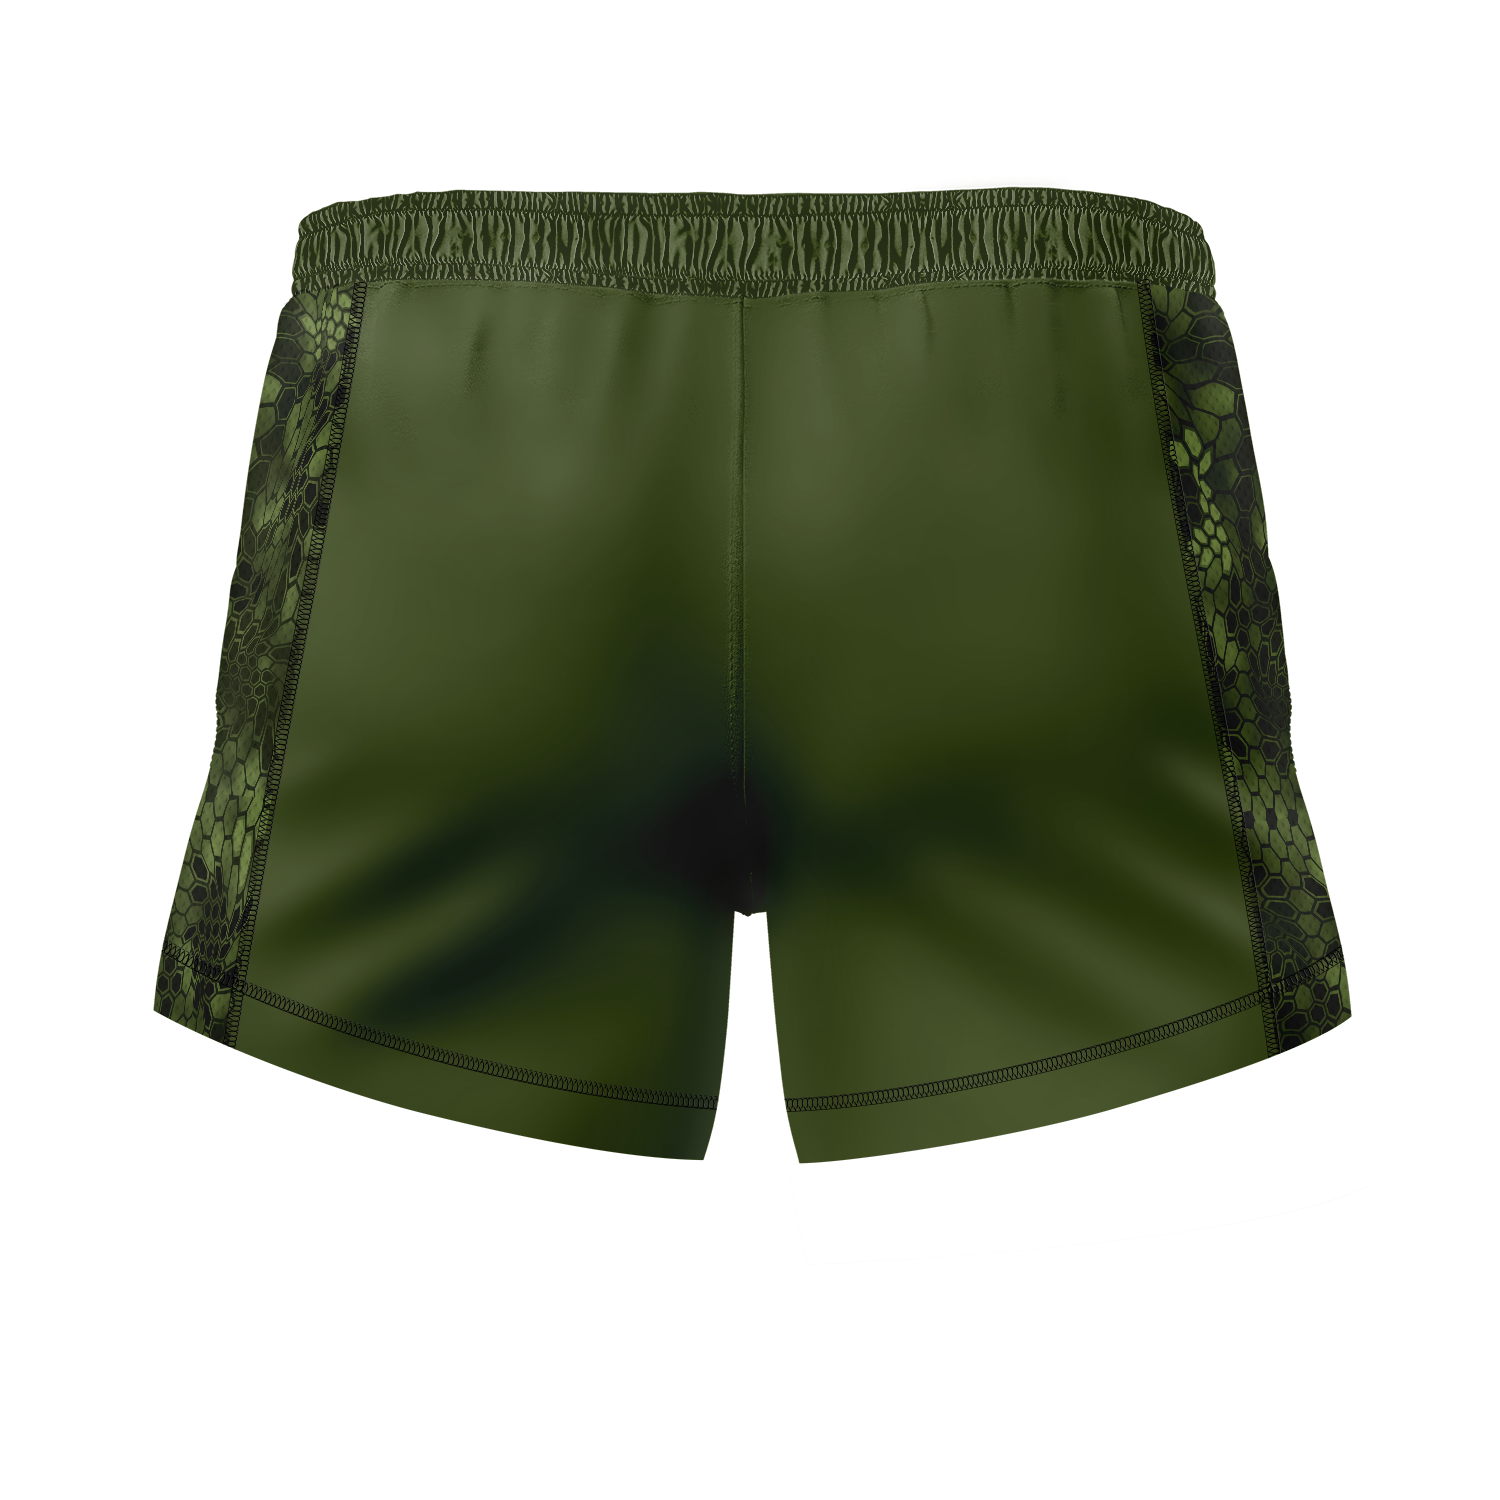 Quintana Combat & Fitness men's fight shorts, od green